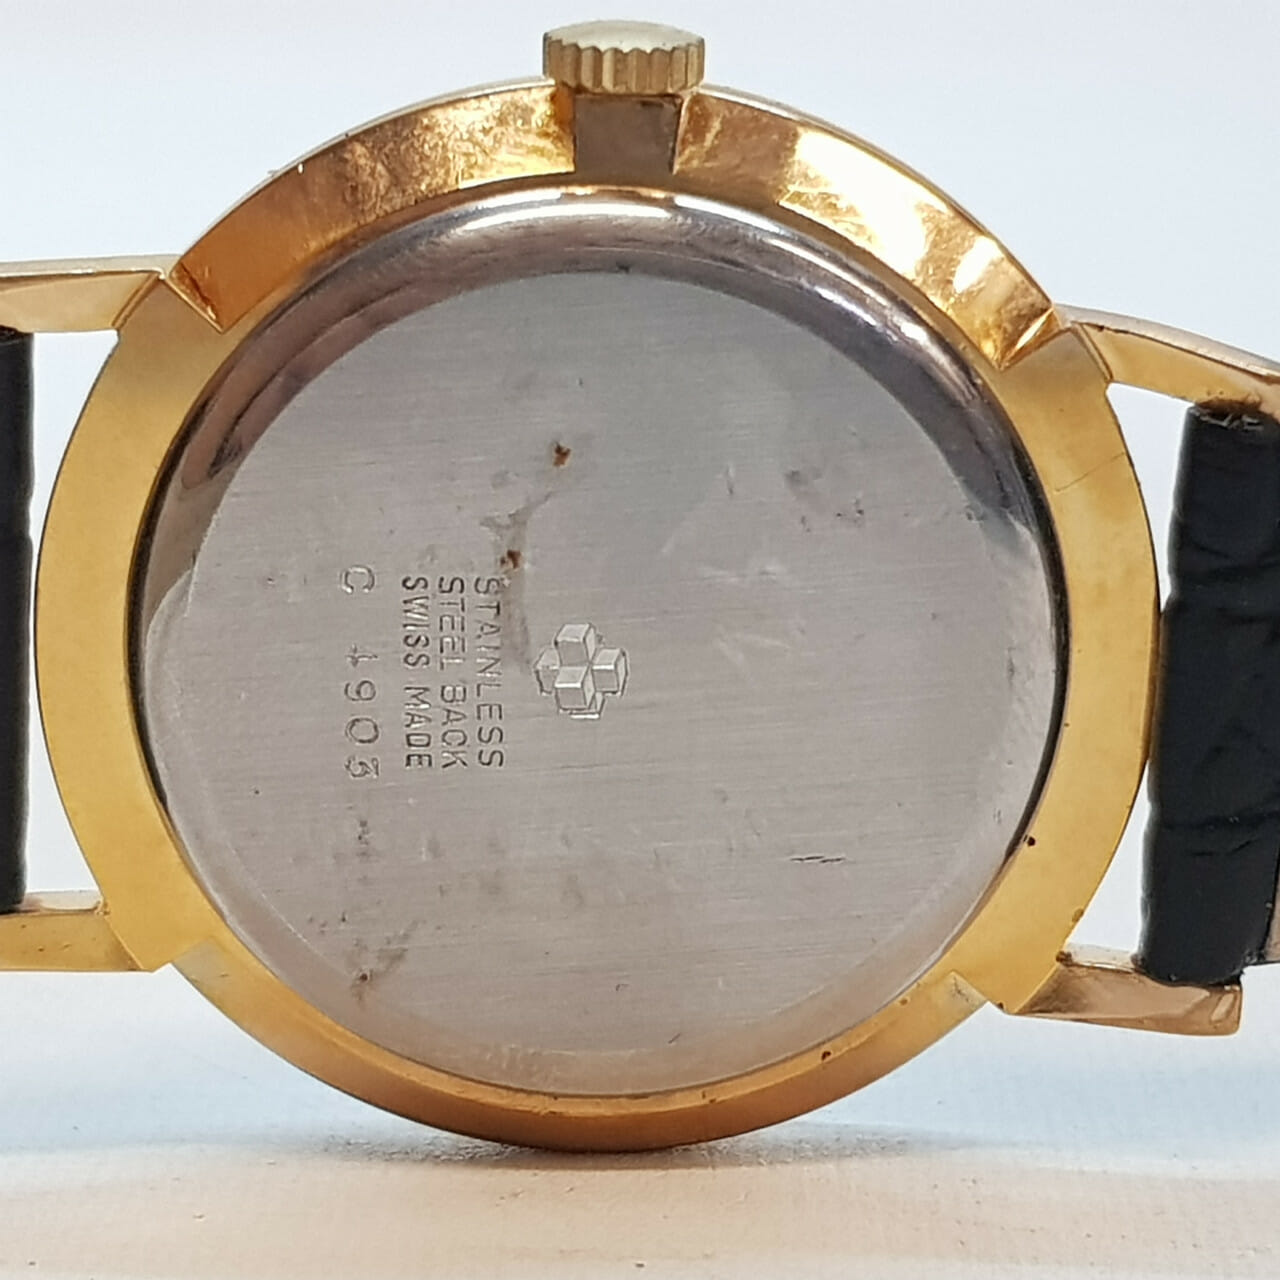 Vintage Doxa Manual Watch C4903